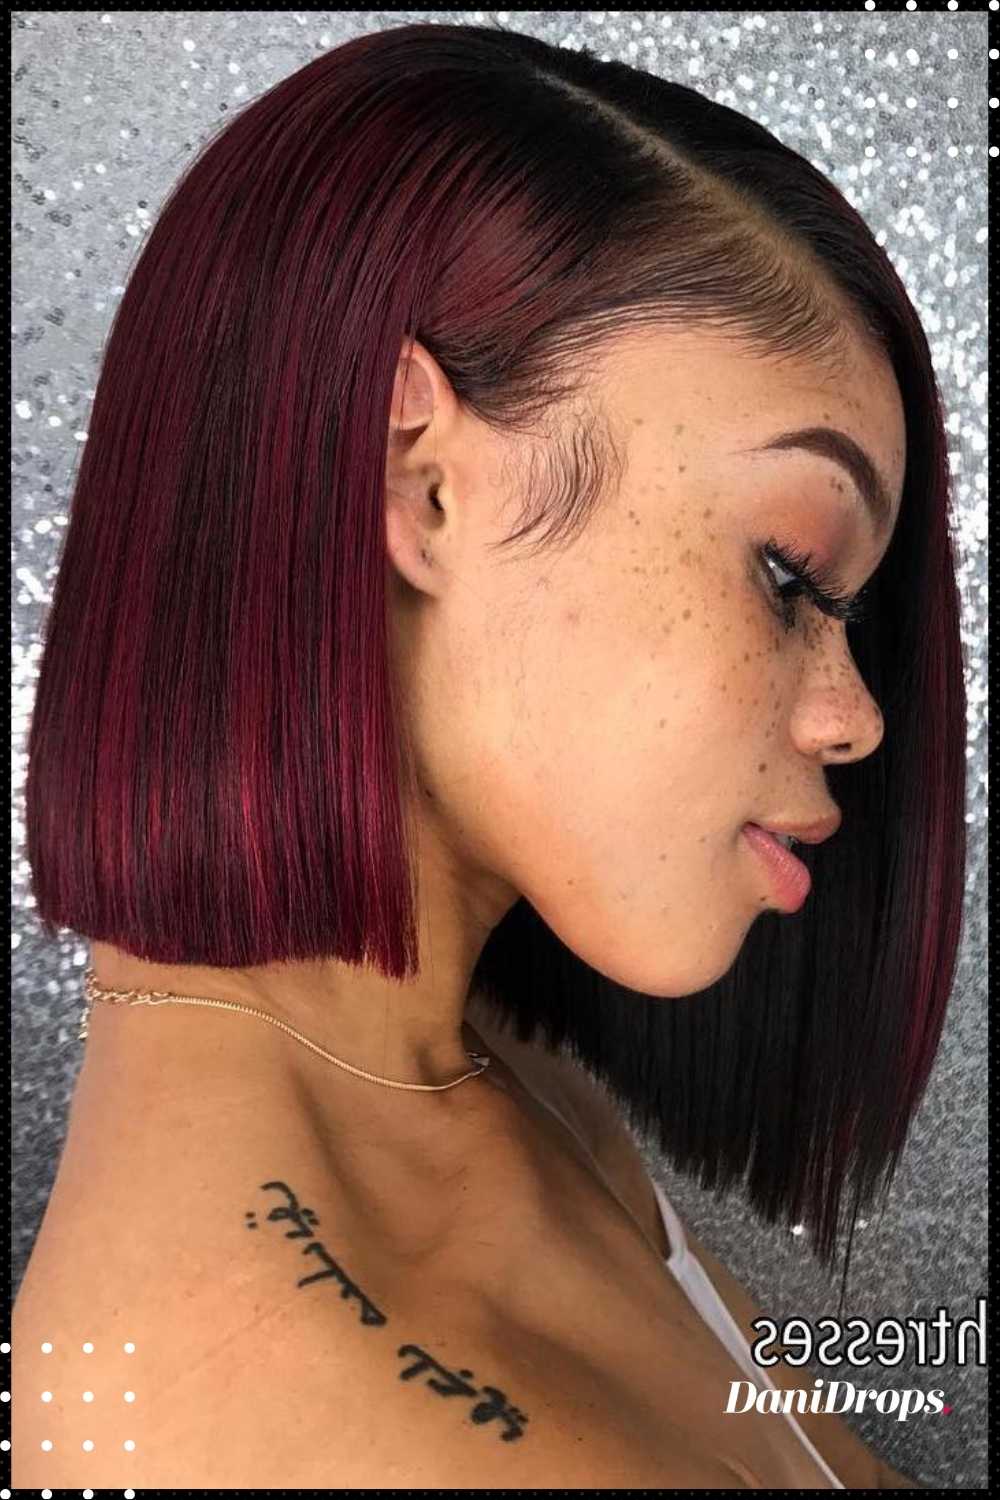 Black Girl with Red Hair | TikTok